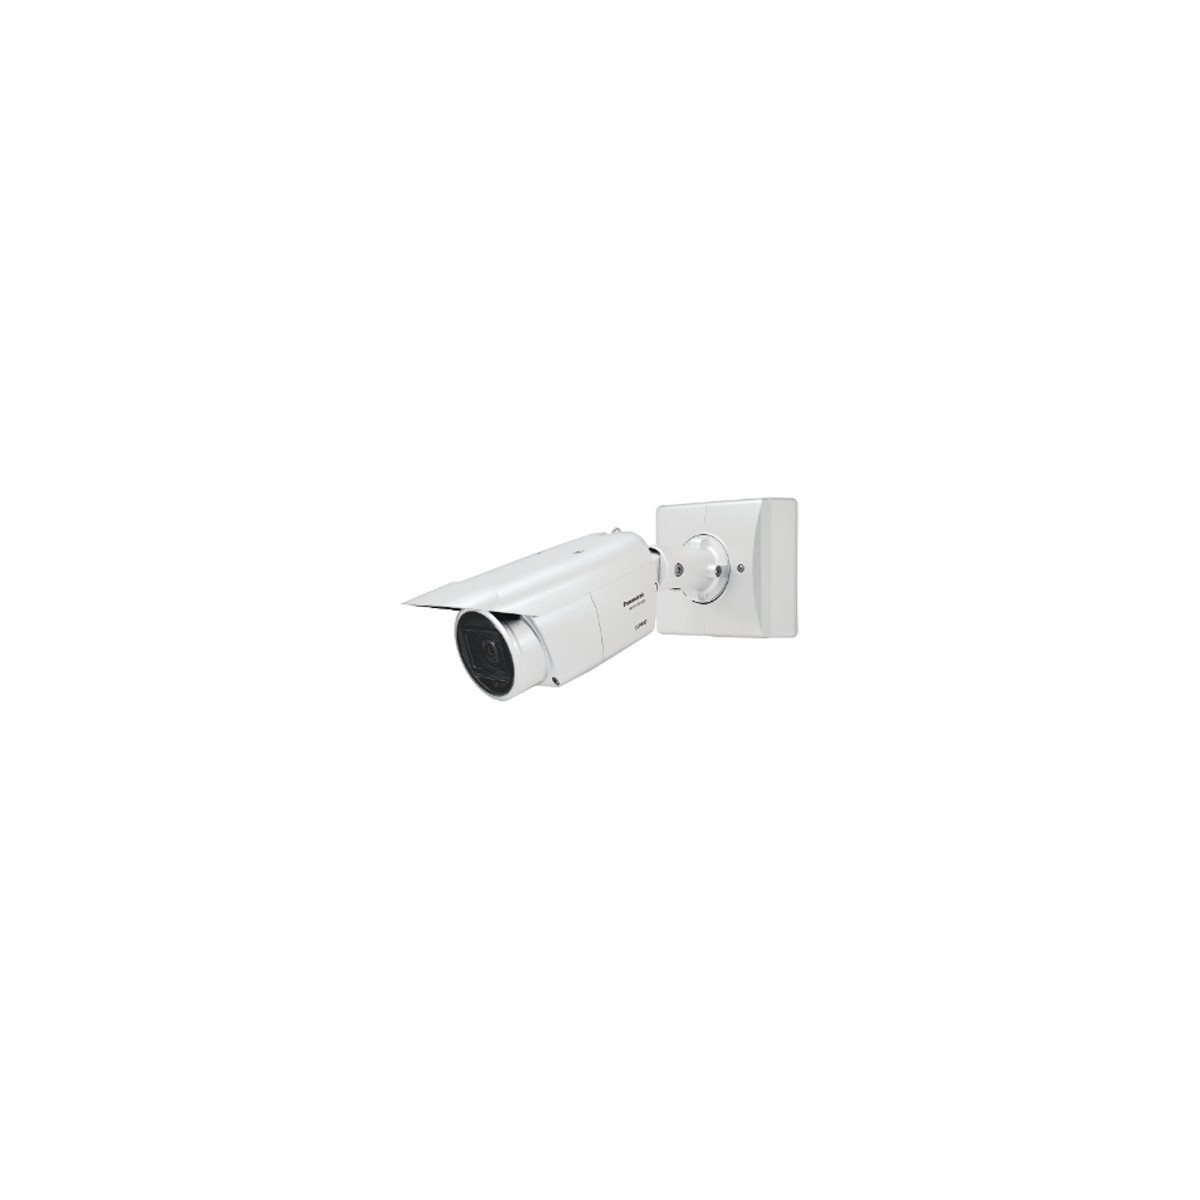 Panasonic WV-X1551LN - IP security camera - Outdoor - Wired - German - English - Spanish - French - Italian - Japanese - Portugu